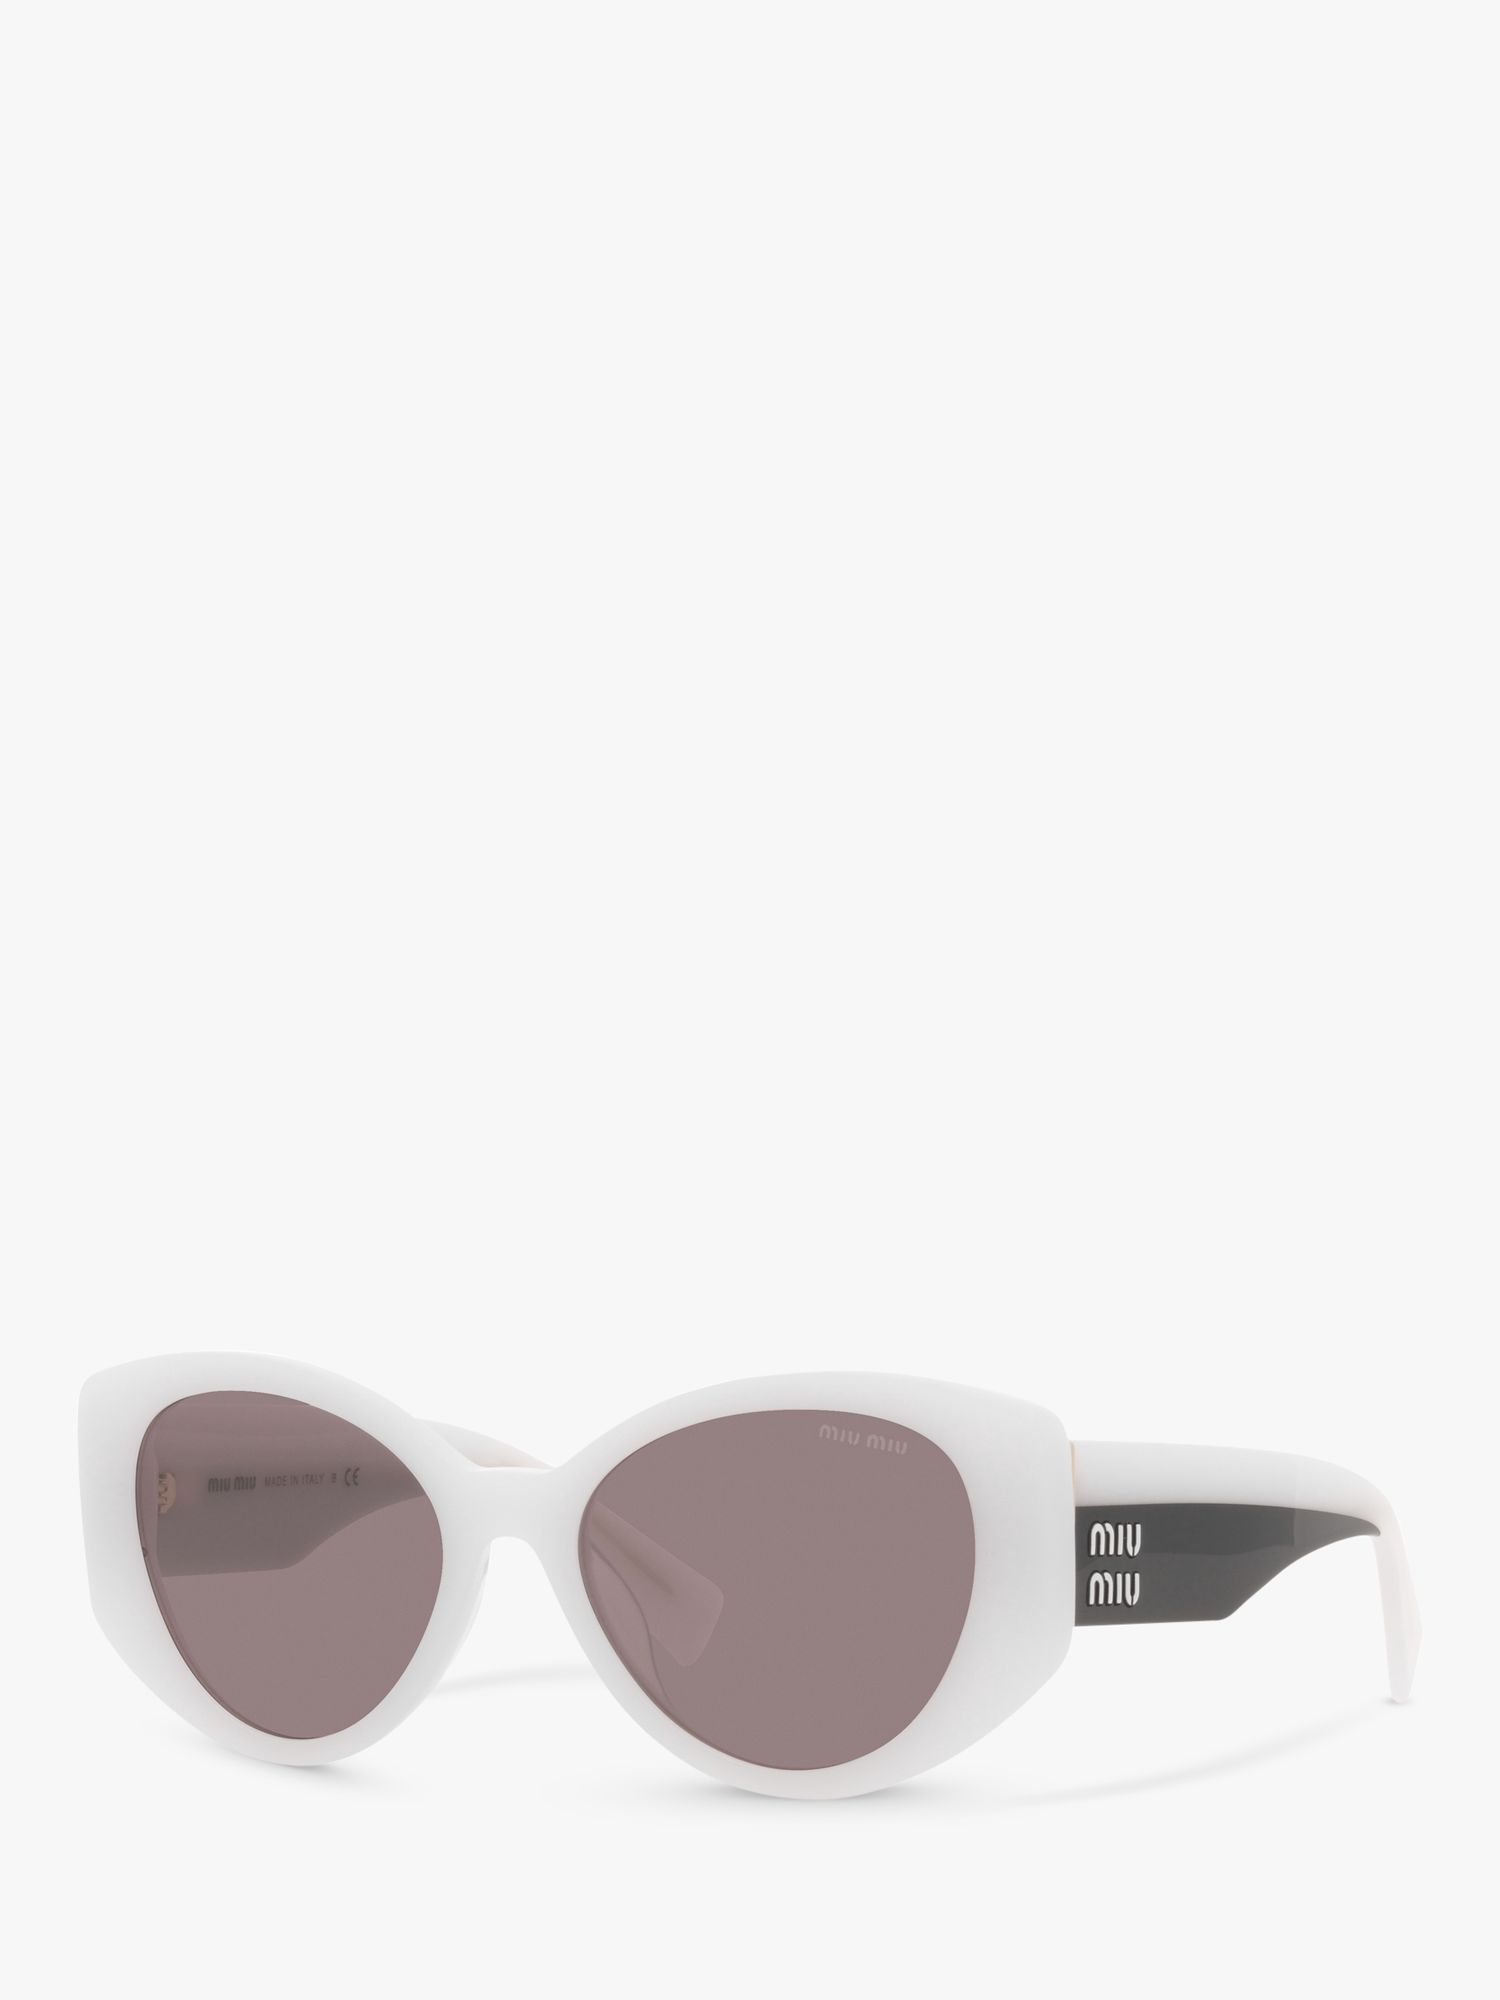 Miu Miu MU 03WS Women's Irregular Sunglasses, White/Grey at John Lewis ...